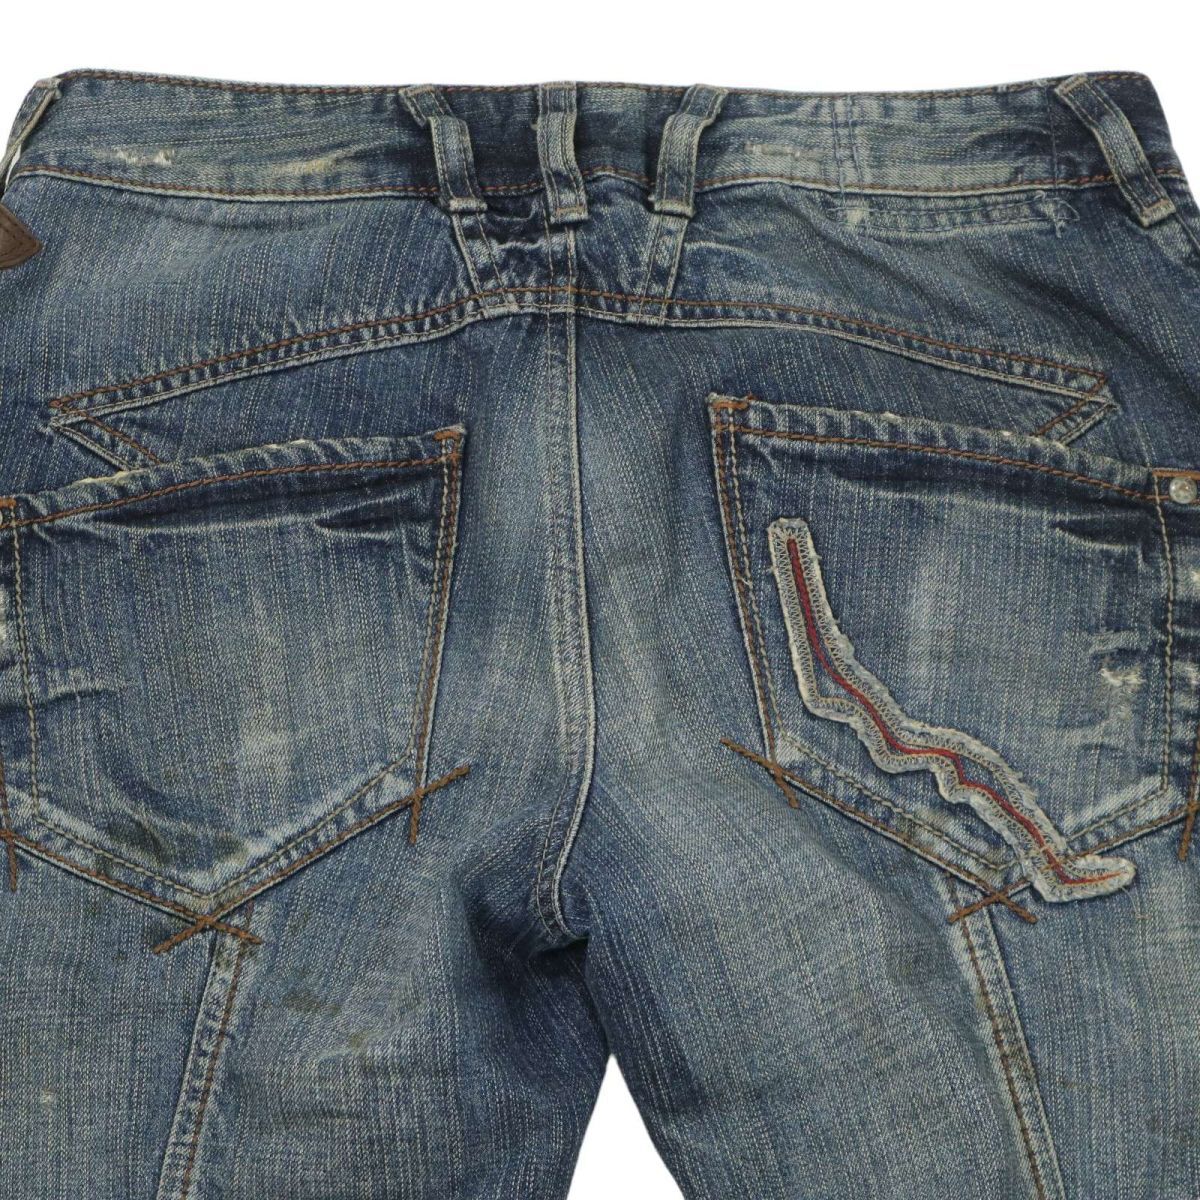 MARITHE FRANCOIS GIRBAUD Мали te franc sowa Jill bo- через год телячья кожа используя обработка распорка Denim брюки джинсы Sz.M мужской C4B01863_4#R